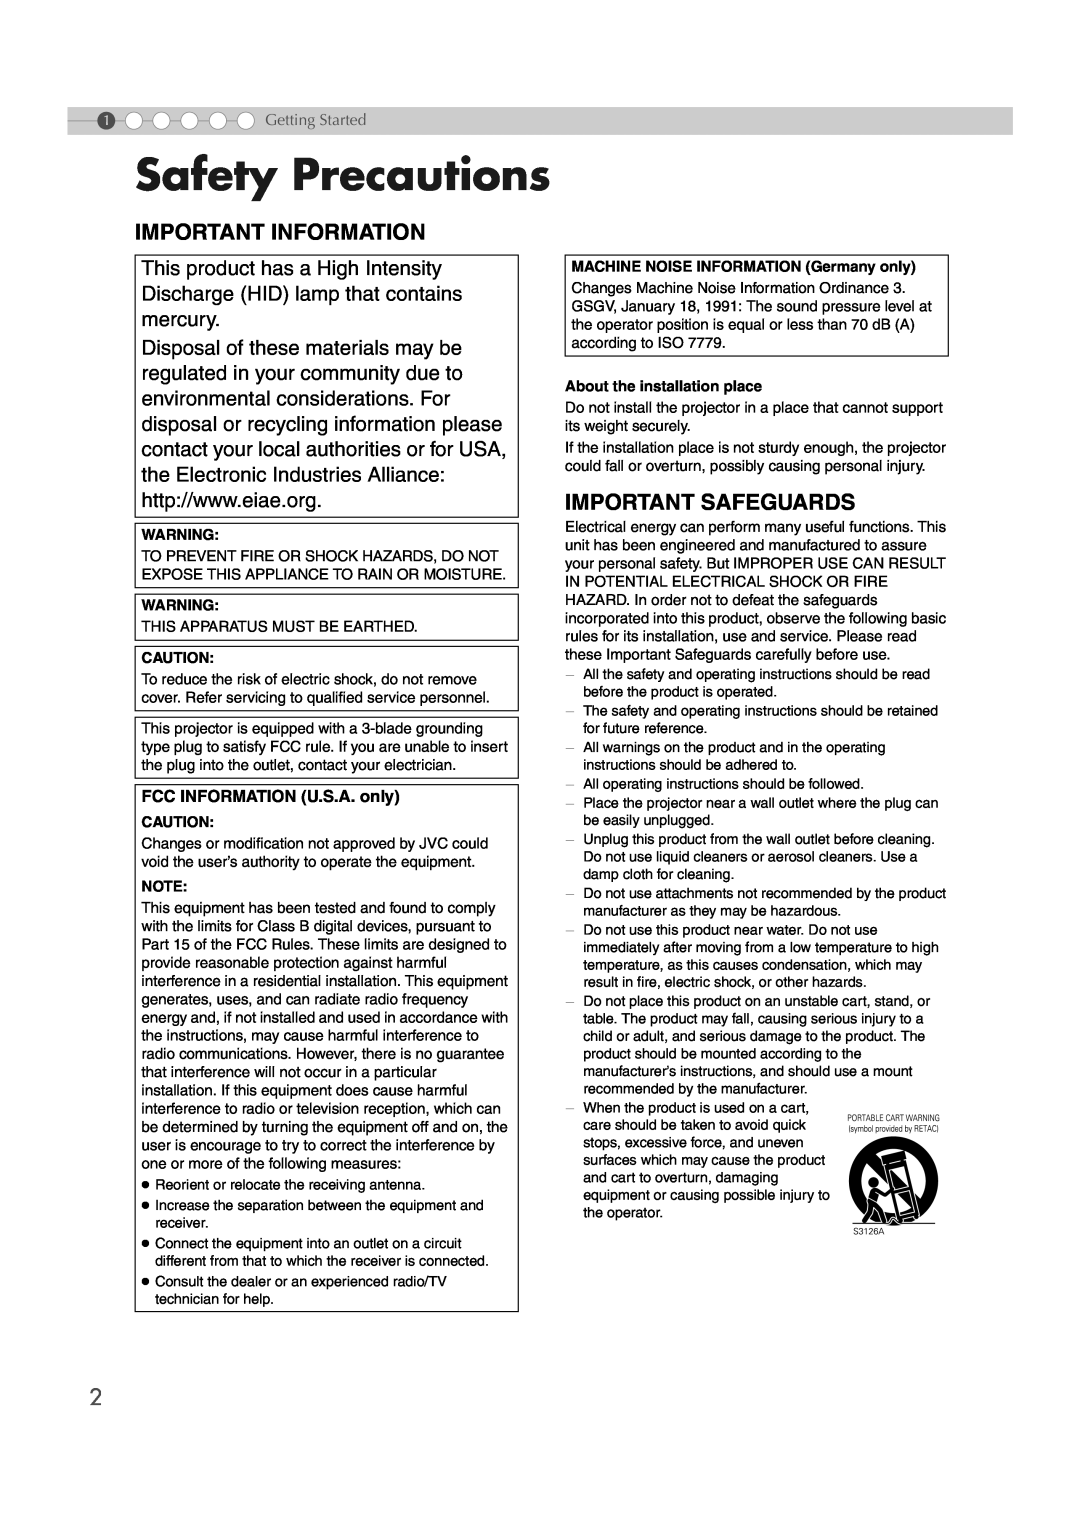 JVC DLA-HD1 manual Safety Precautions, Important Information, Important Safeguards, FCC INFORMATION U.S.A. only 